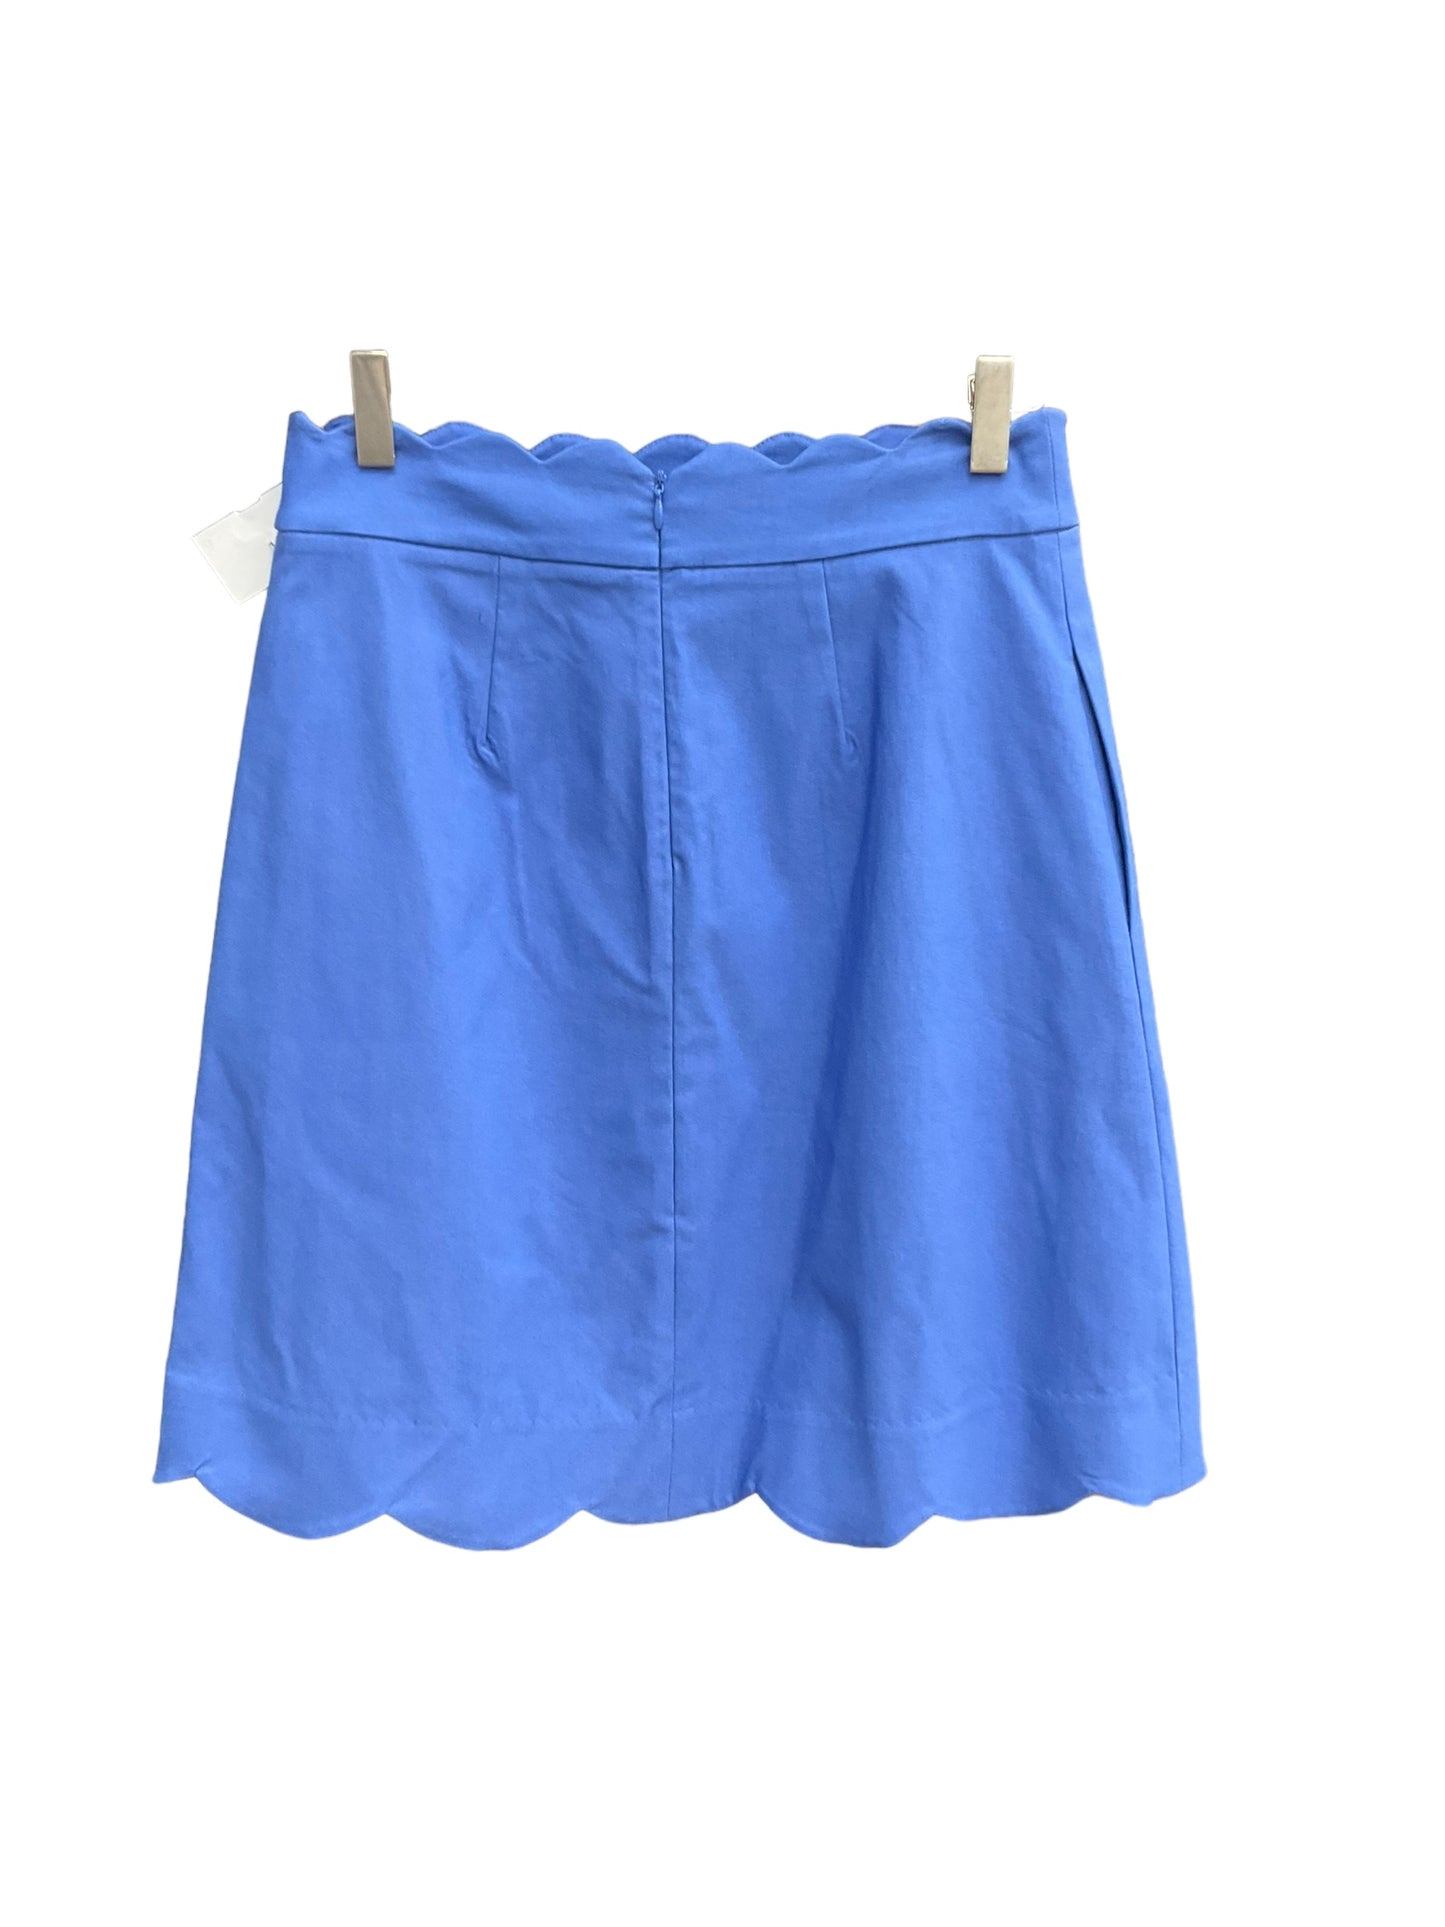 Skirt Midi By J Mclaughlin  Size: 4